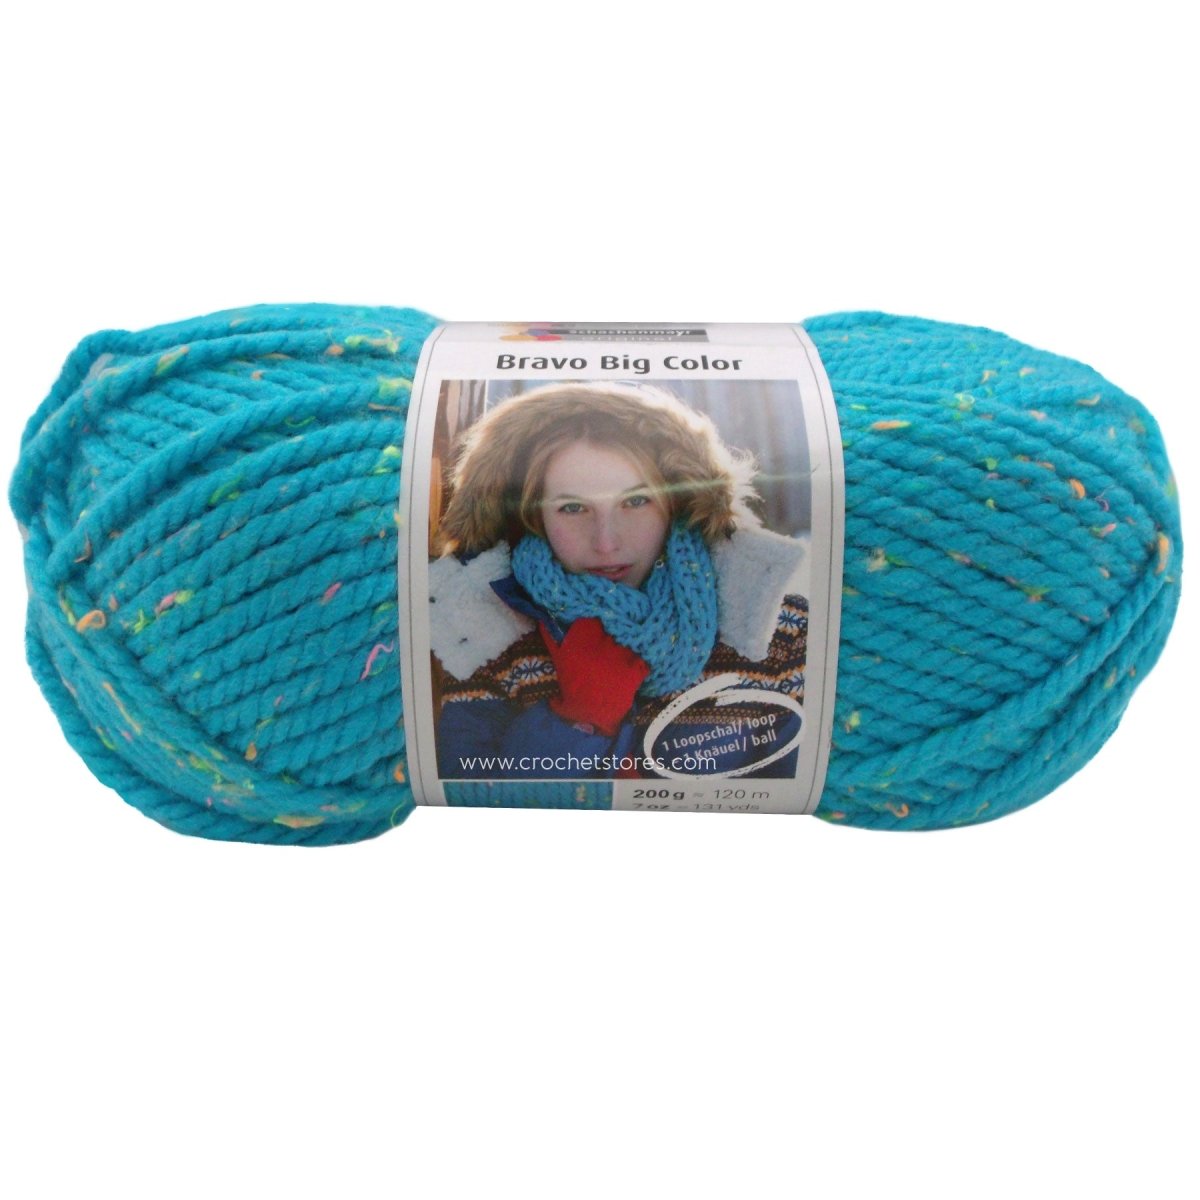 BRAVO BIG COLOR - Crochetstores9807720-3654053859056519